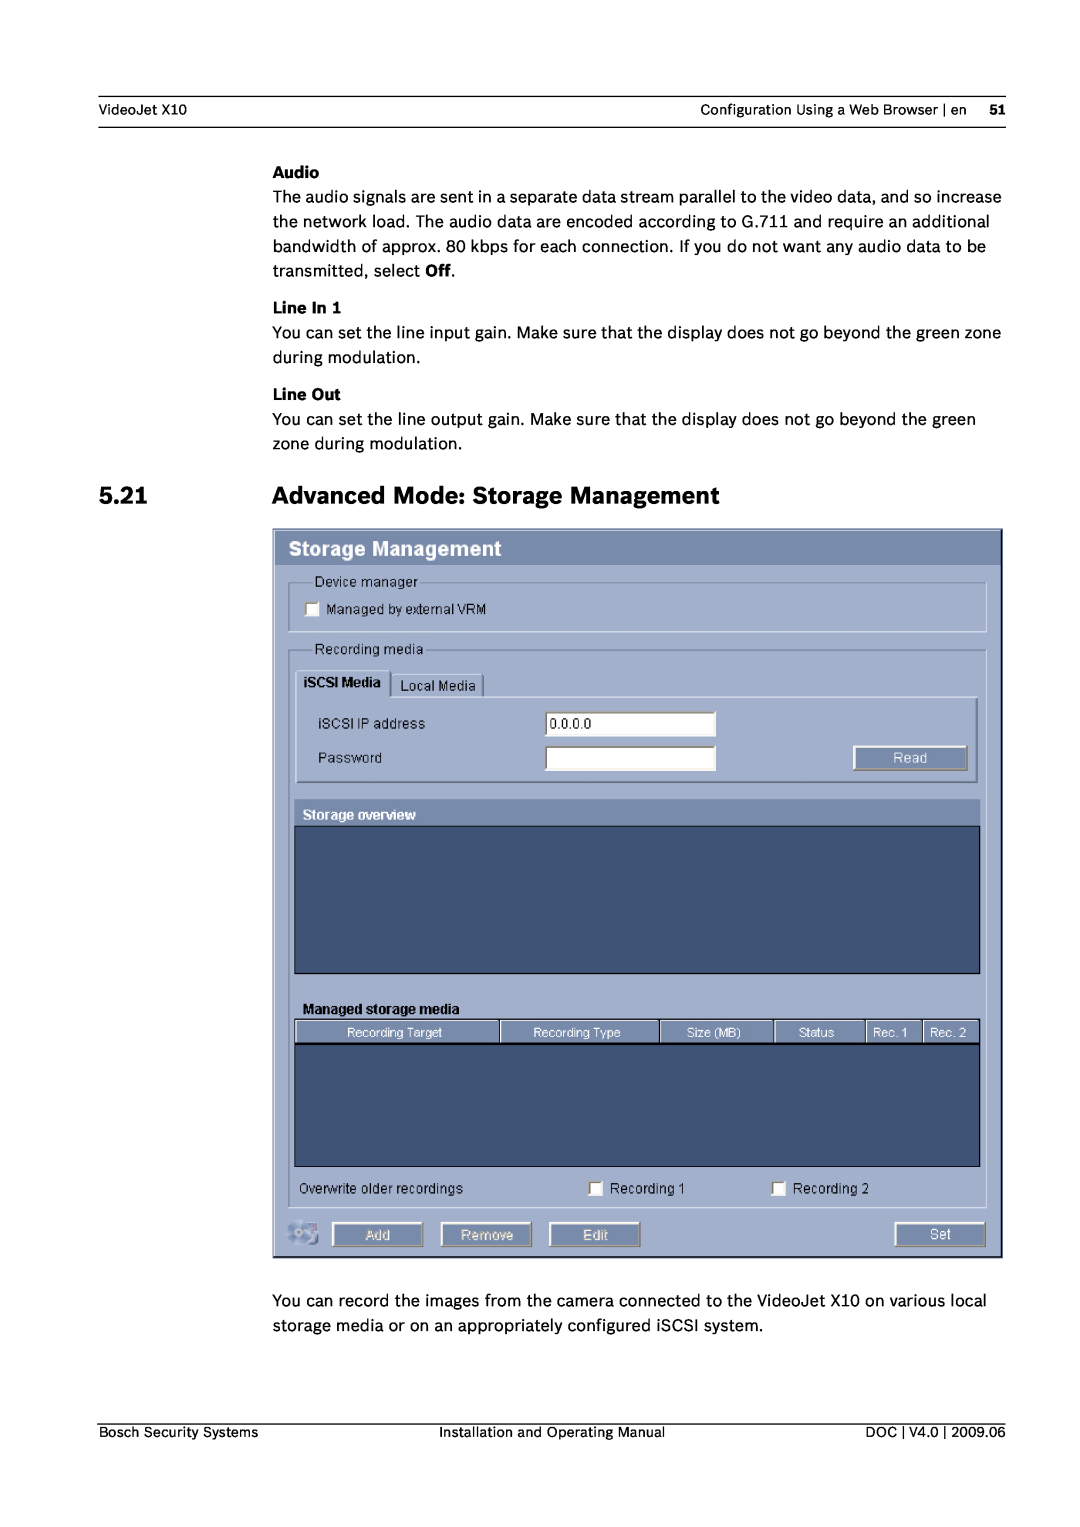 Bosch Appliances X10 manual 5.21, Advanced Mode Storage Management, Audio, Line In, Line Out 